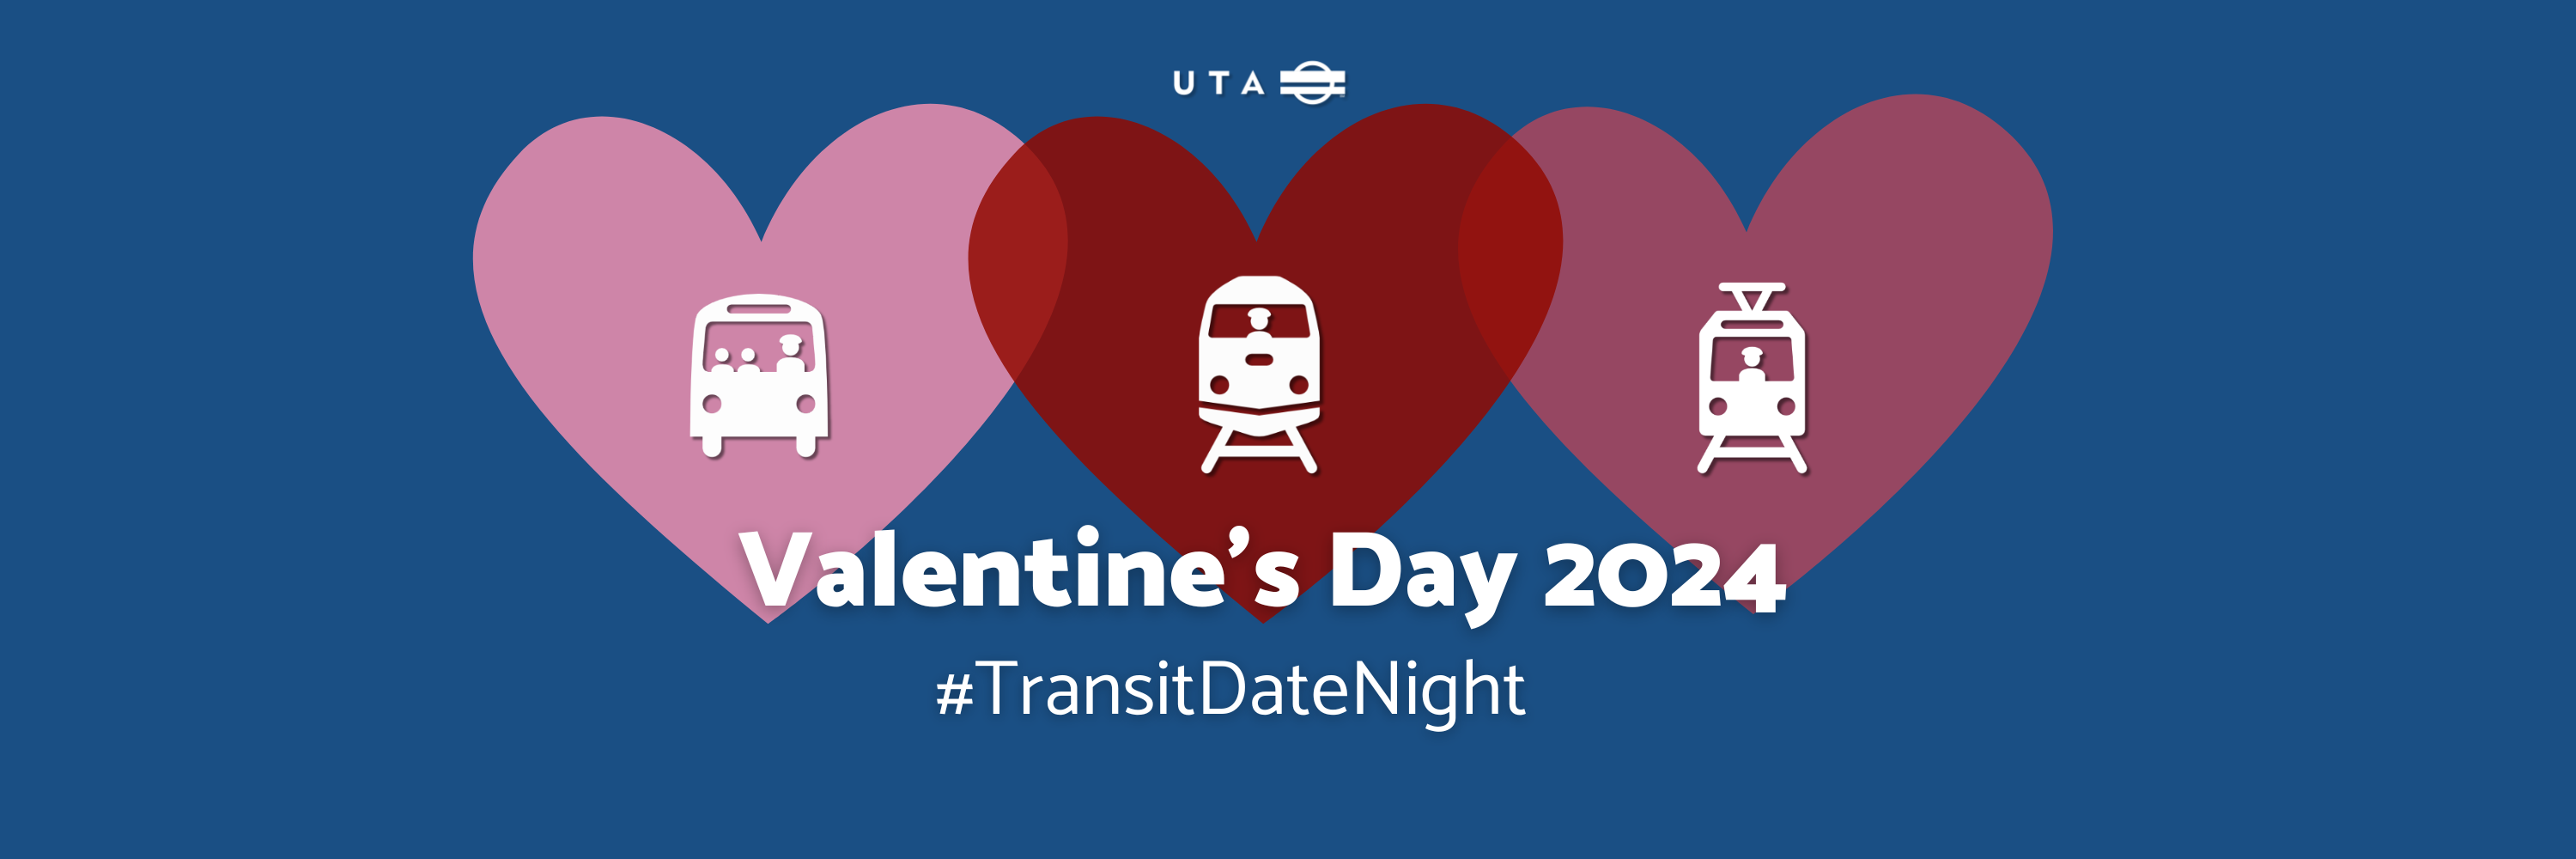 Date Nite Train: Valentine's Evening in Downtown Salt Lake City